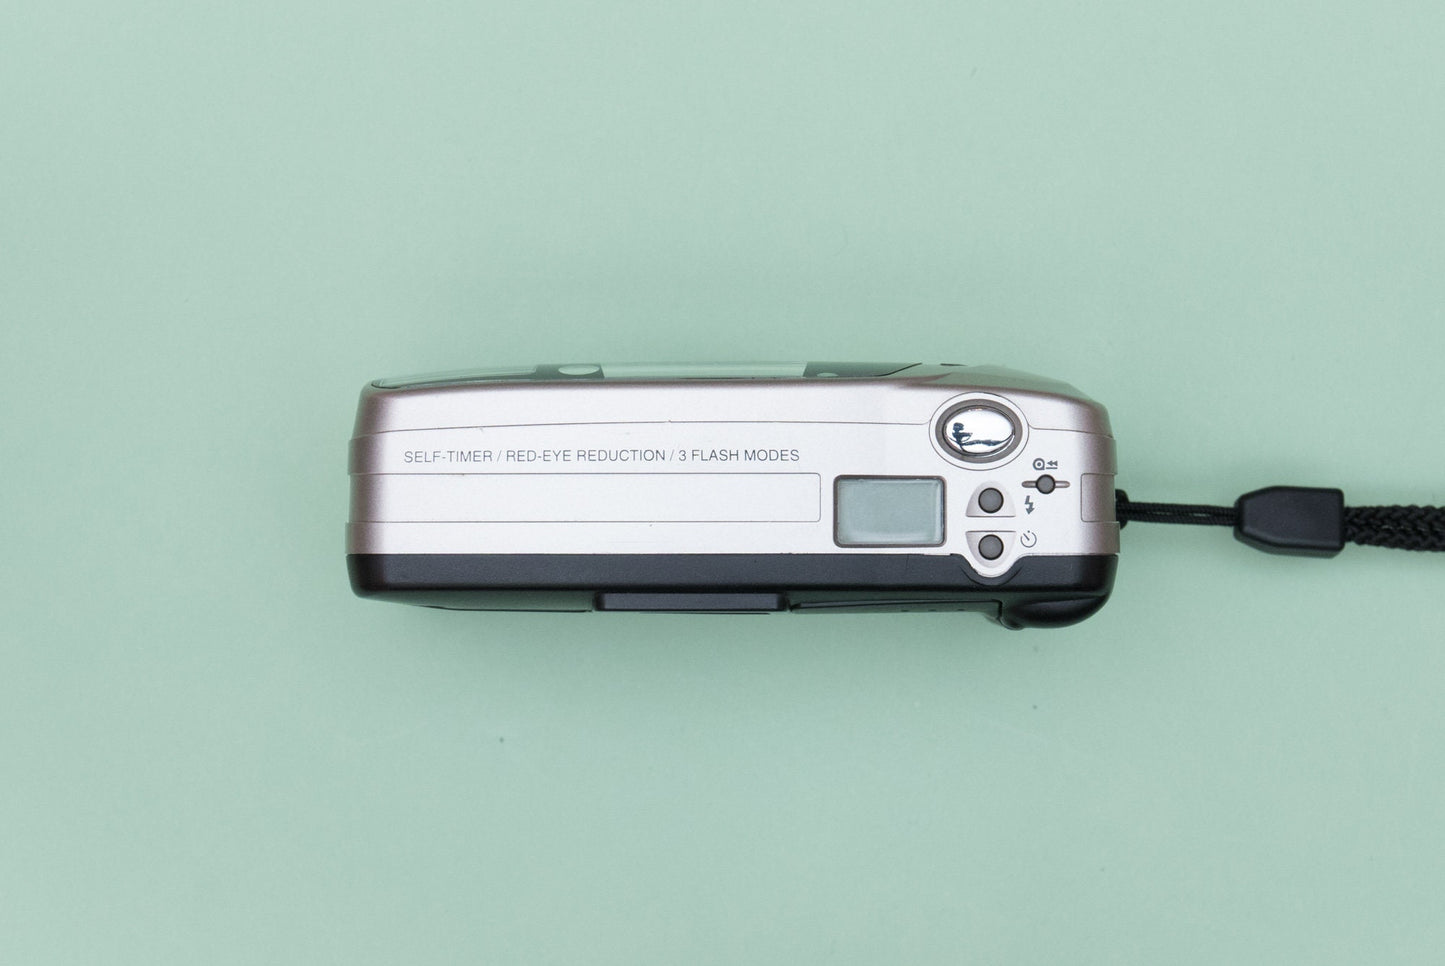 Minolta AF50 Big Finder Compact 35mm Point and Shoot Film Camera